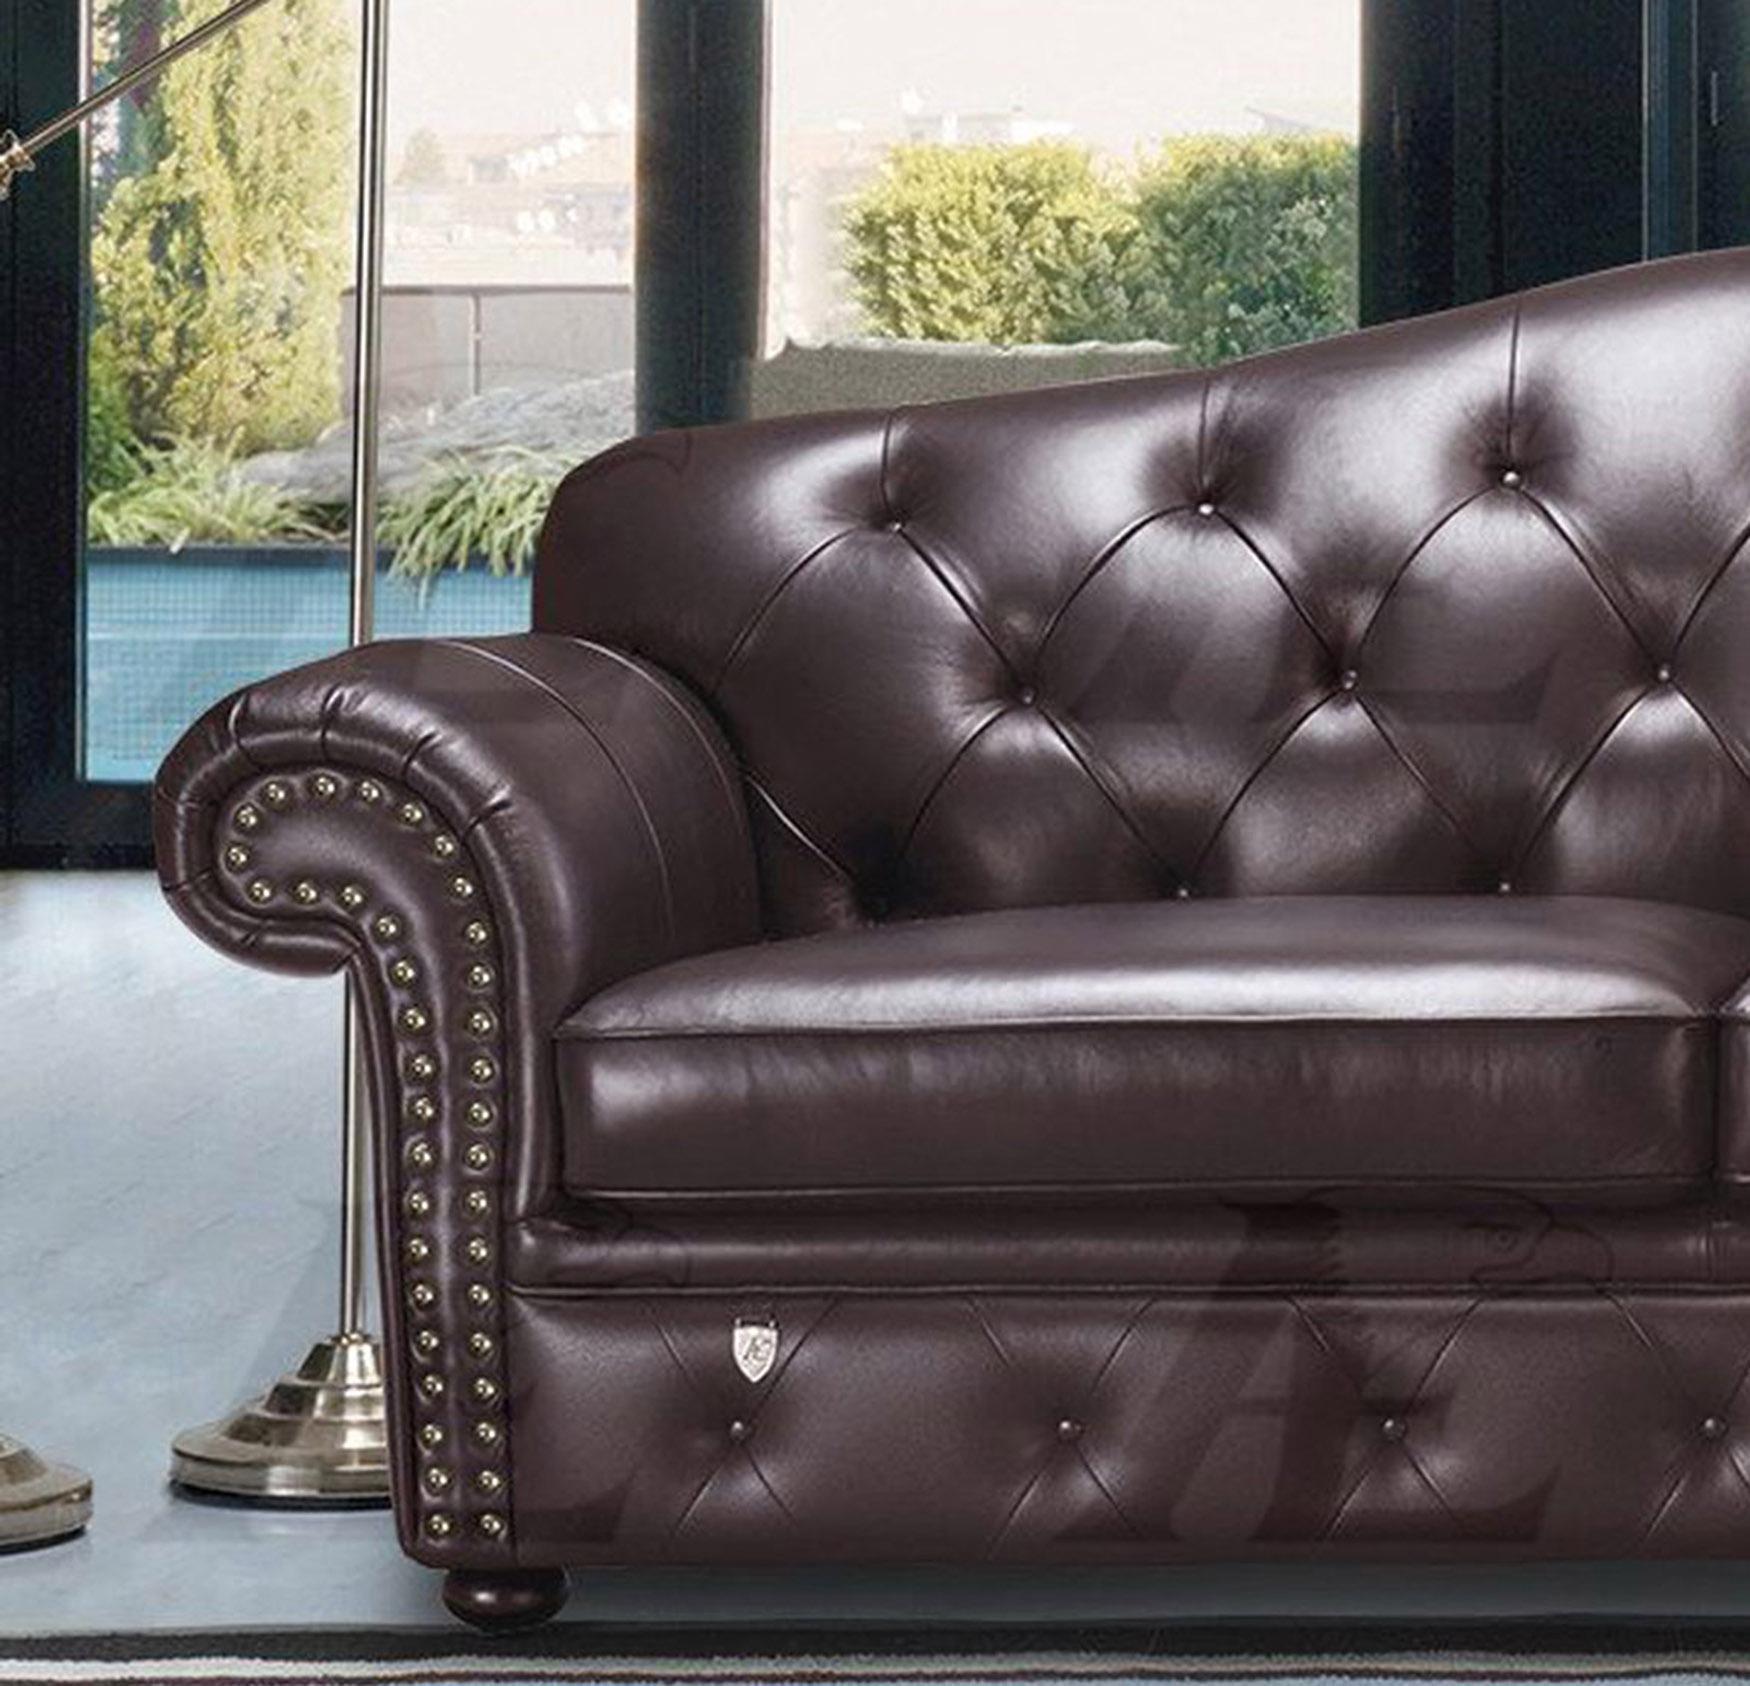 

                    
American Eagle Furniture EK699-BR Sofa Brown Italian Leather Purchase 
